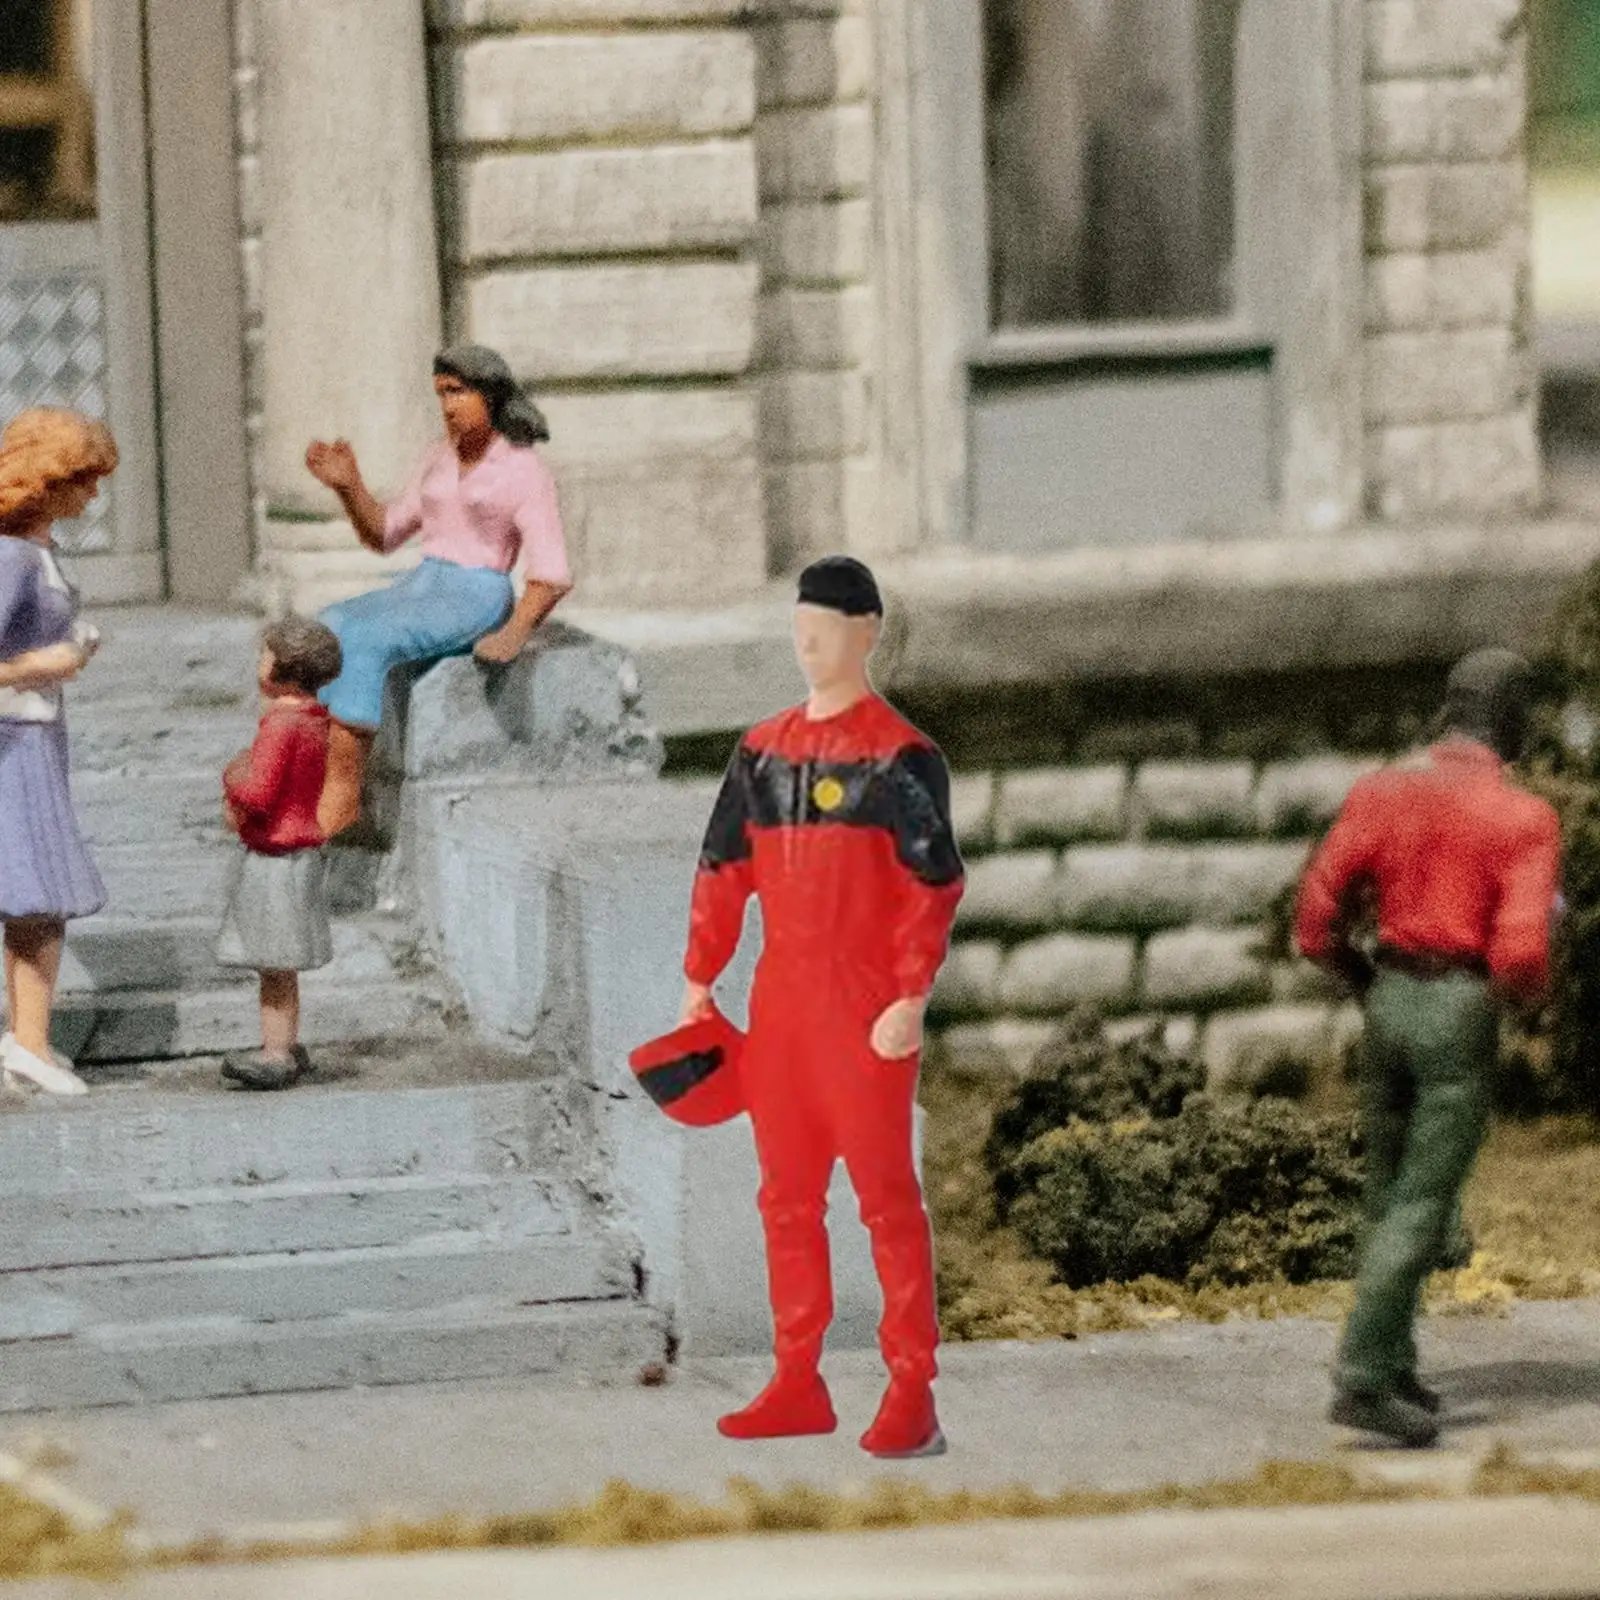 1/64 Racer Boy Figures Fairy Garden Movie Props Layout Miniature Decoration